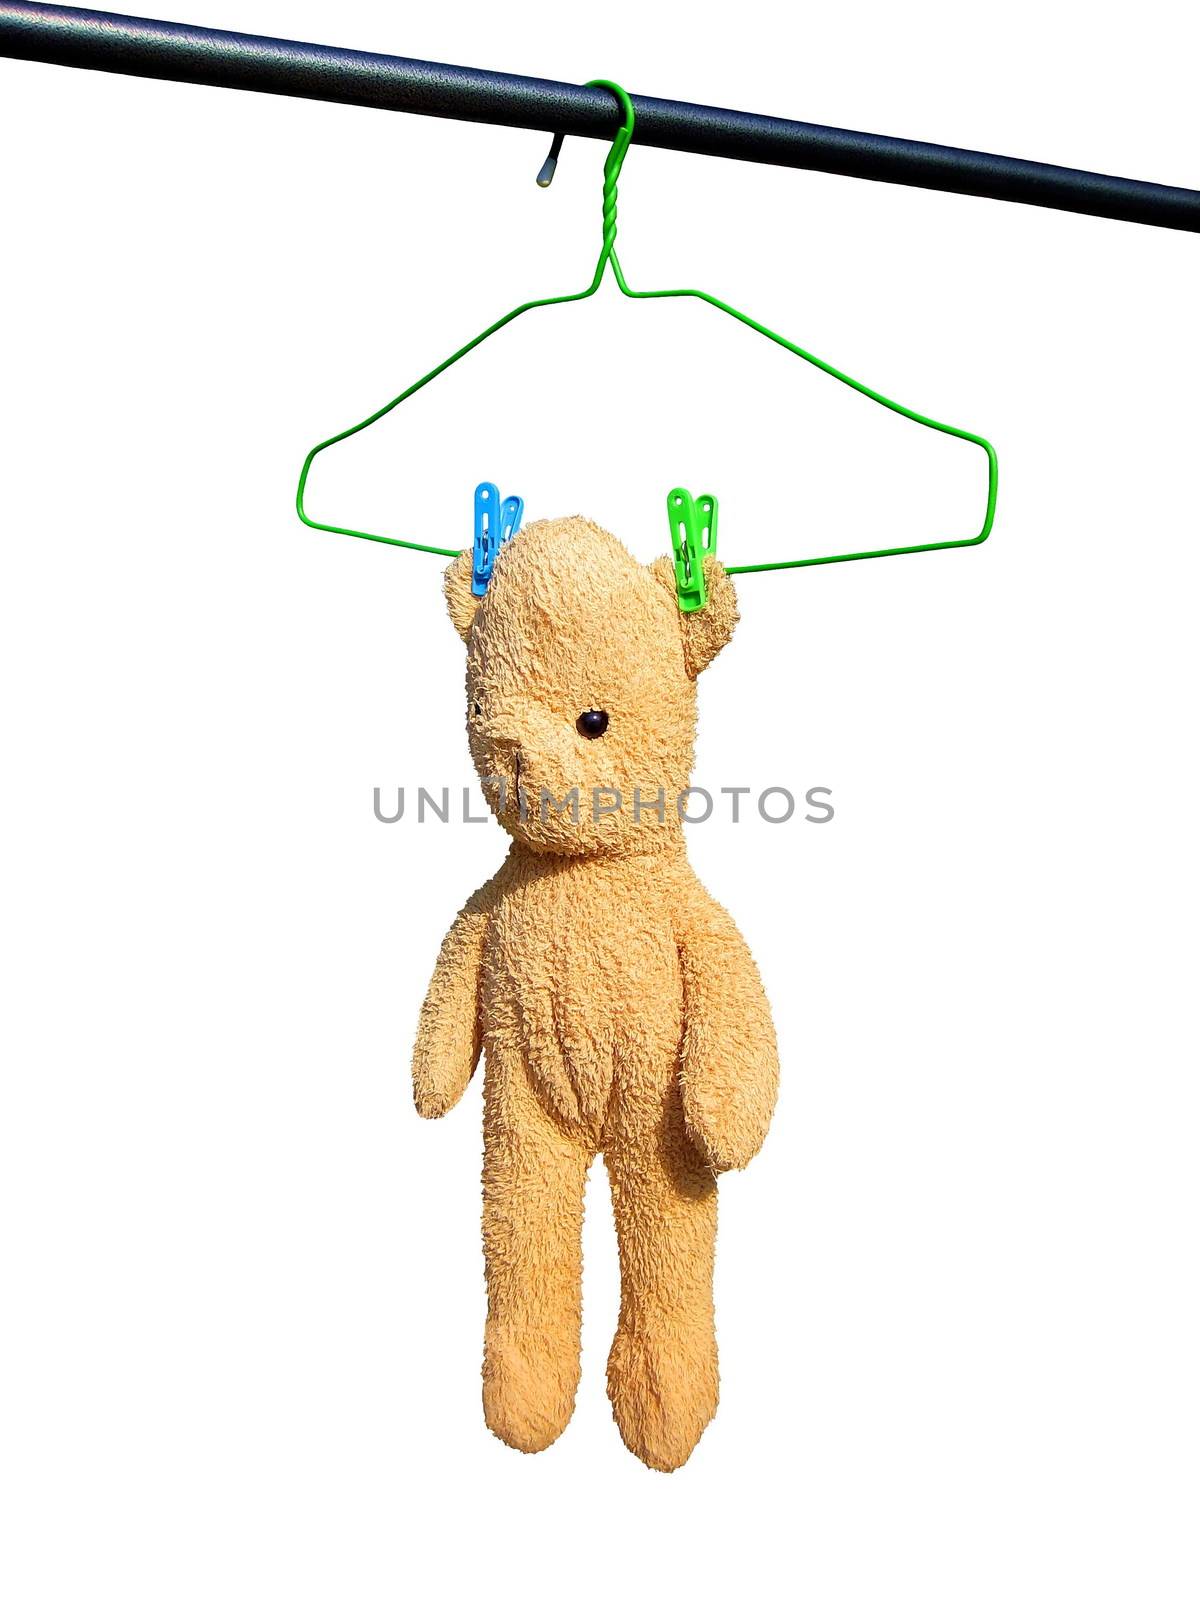 A teddy bear hang on clothes line.